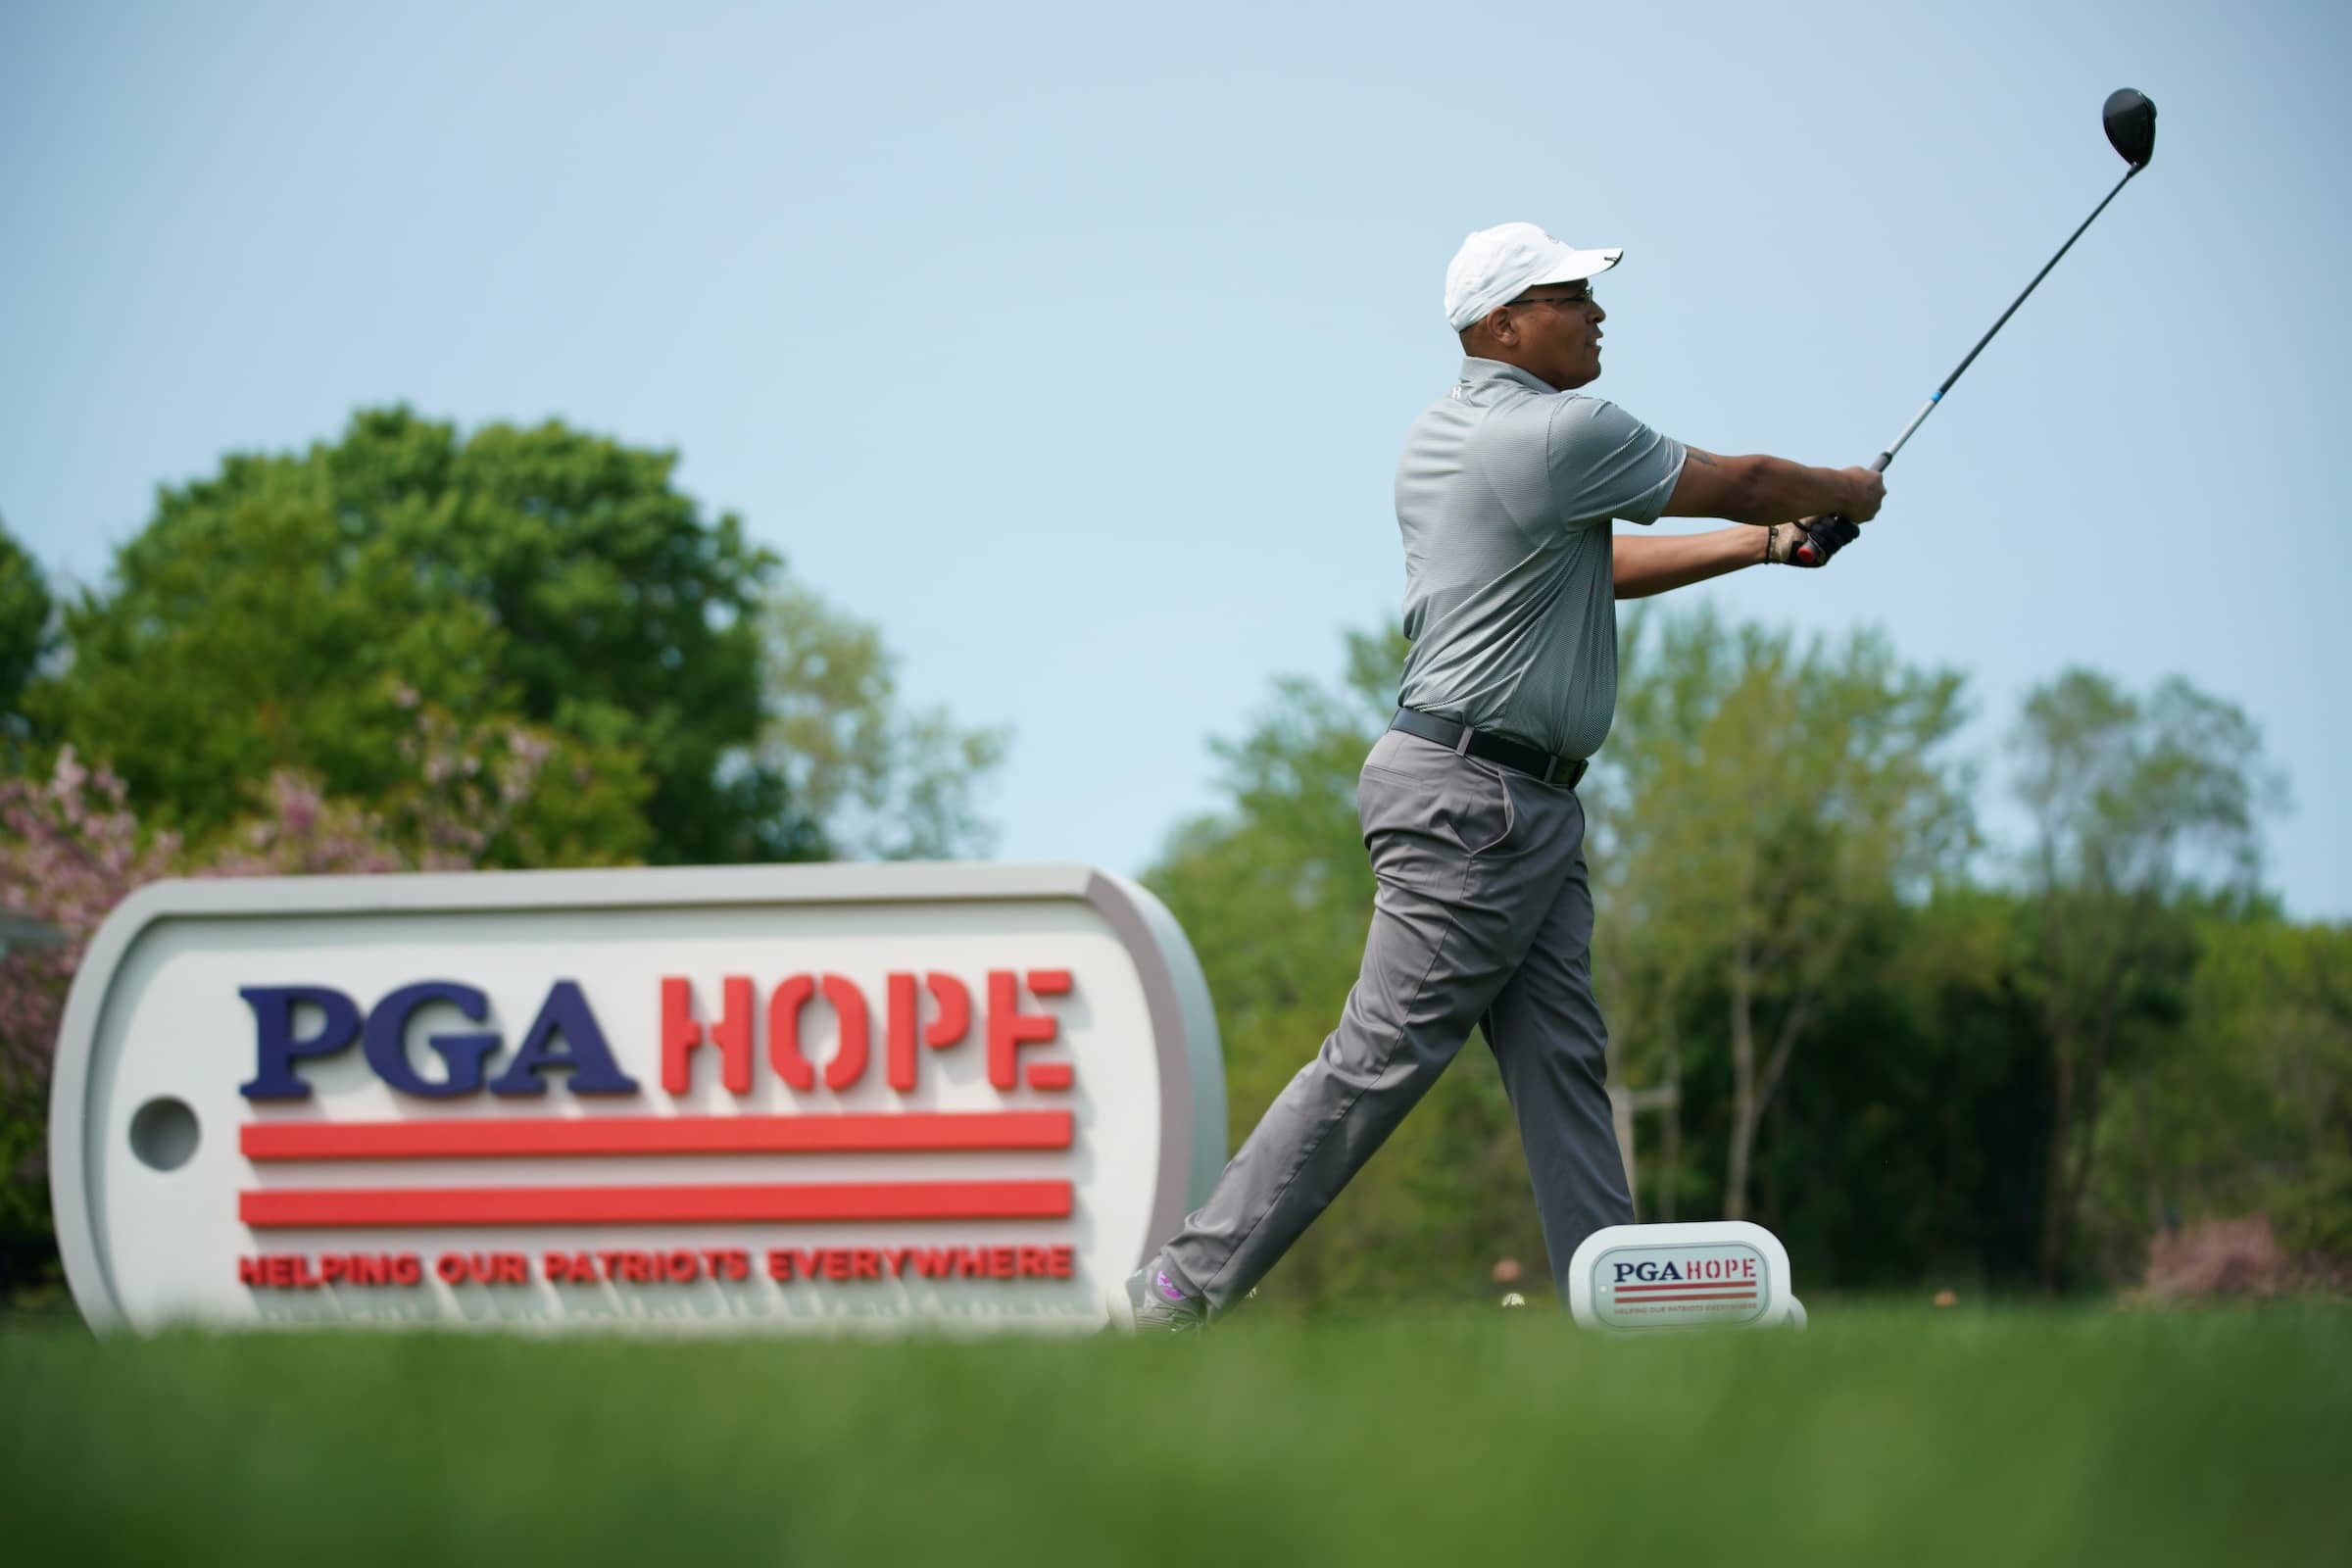 Golfer tees off next to PGA HOPE advertising board